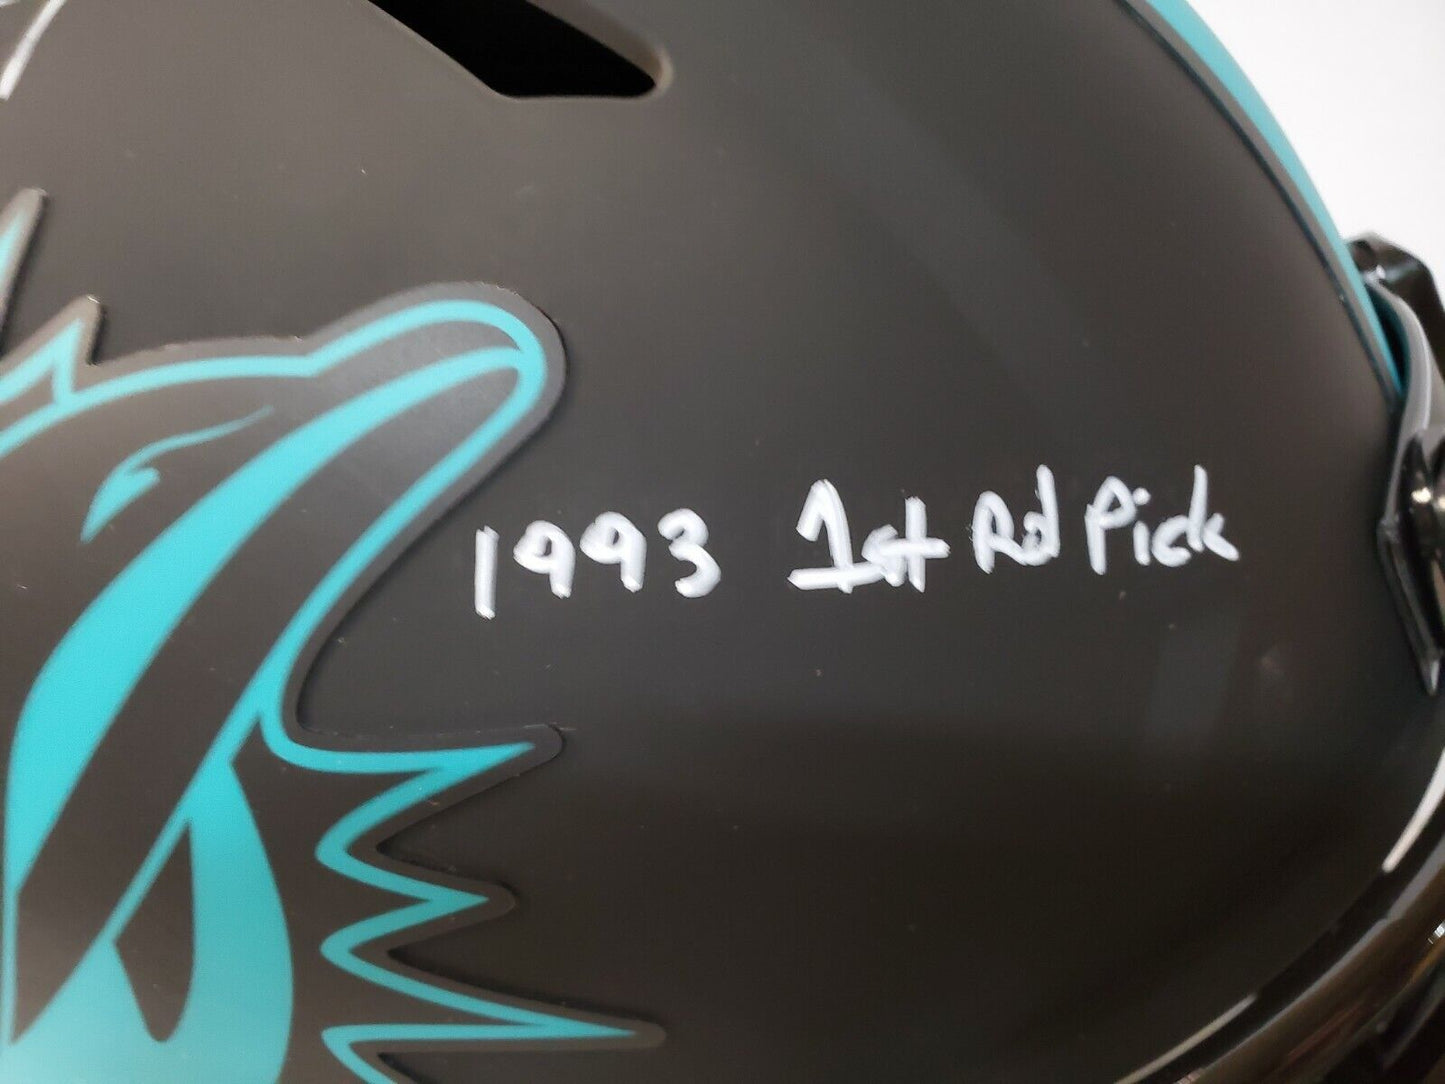 MVP Authentics Miami Dolphins Oj Mcduffie Signed Insc Full Size Eclipse Replica Helmet Jsa Coa 270 sports jersey framing , jersey framing